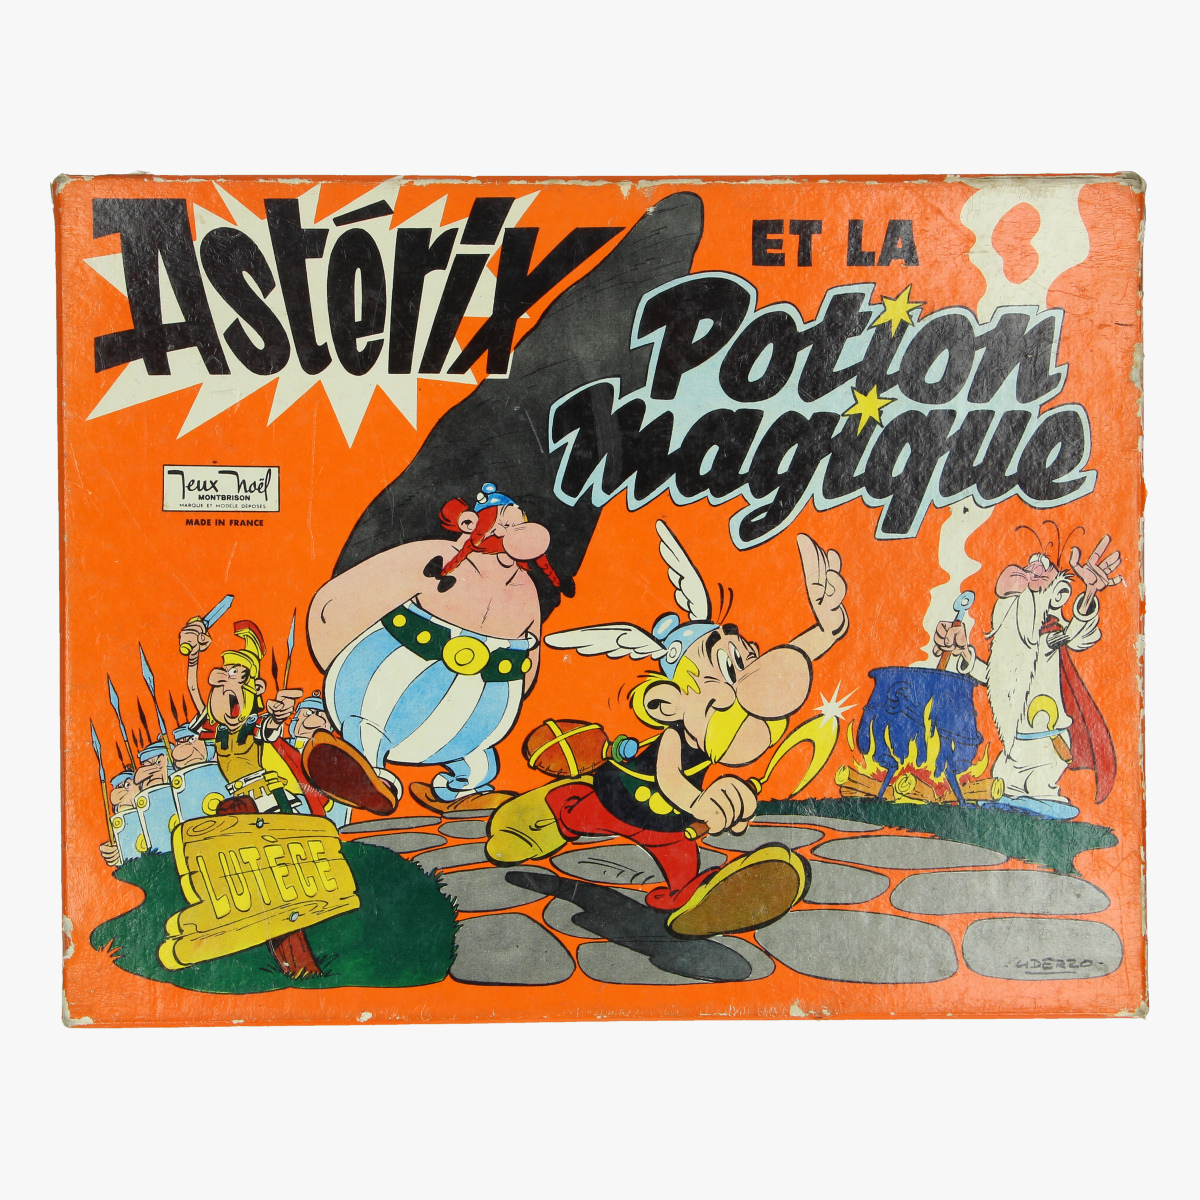 Afbeeldingen van bordspel astérix et la potion magique made in france 